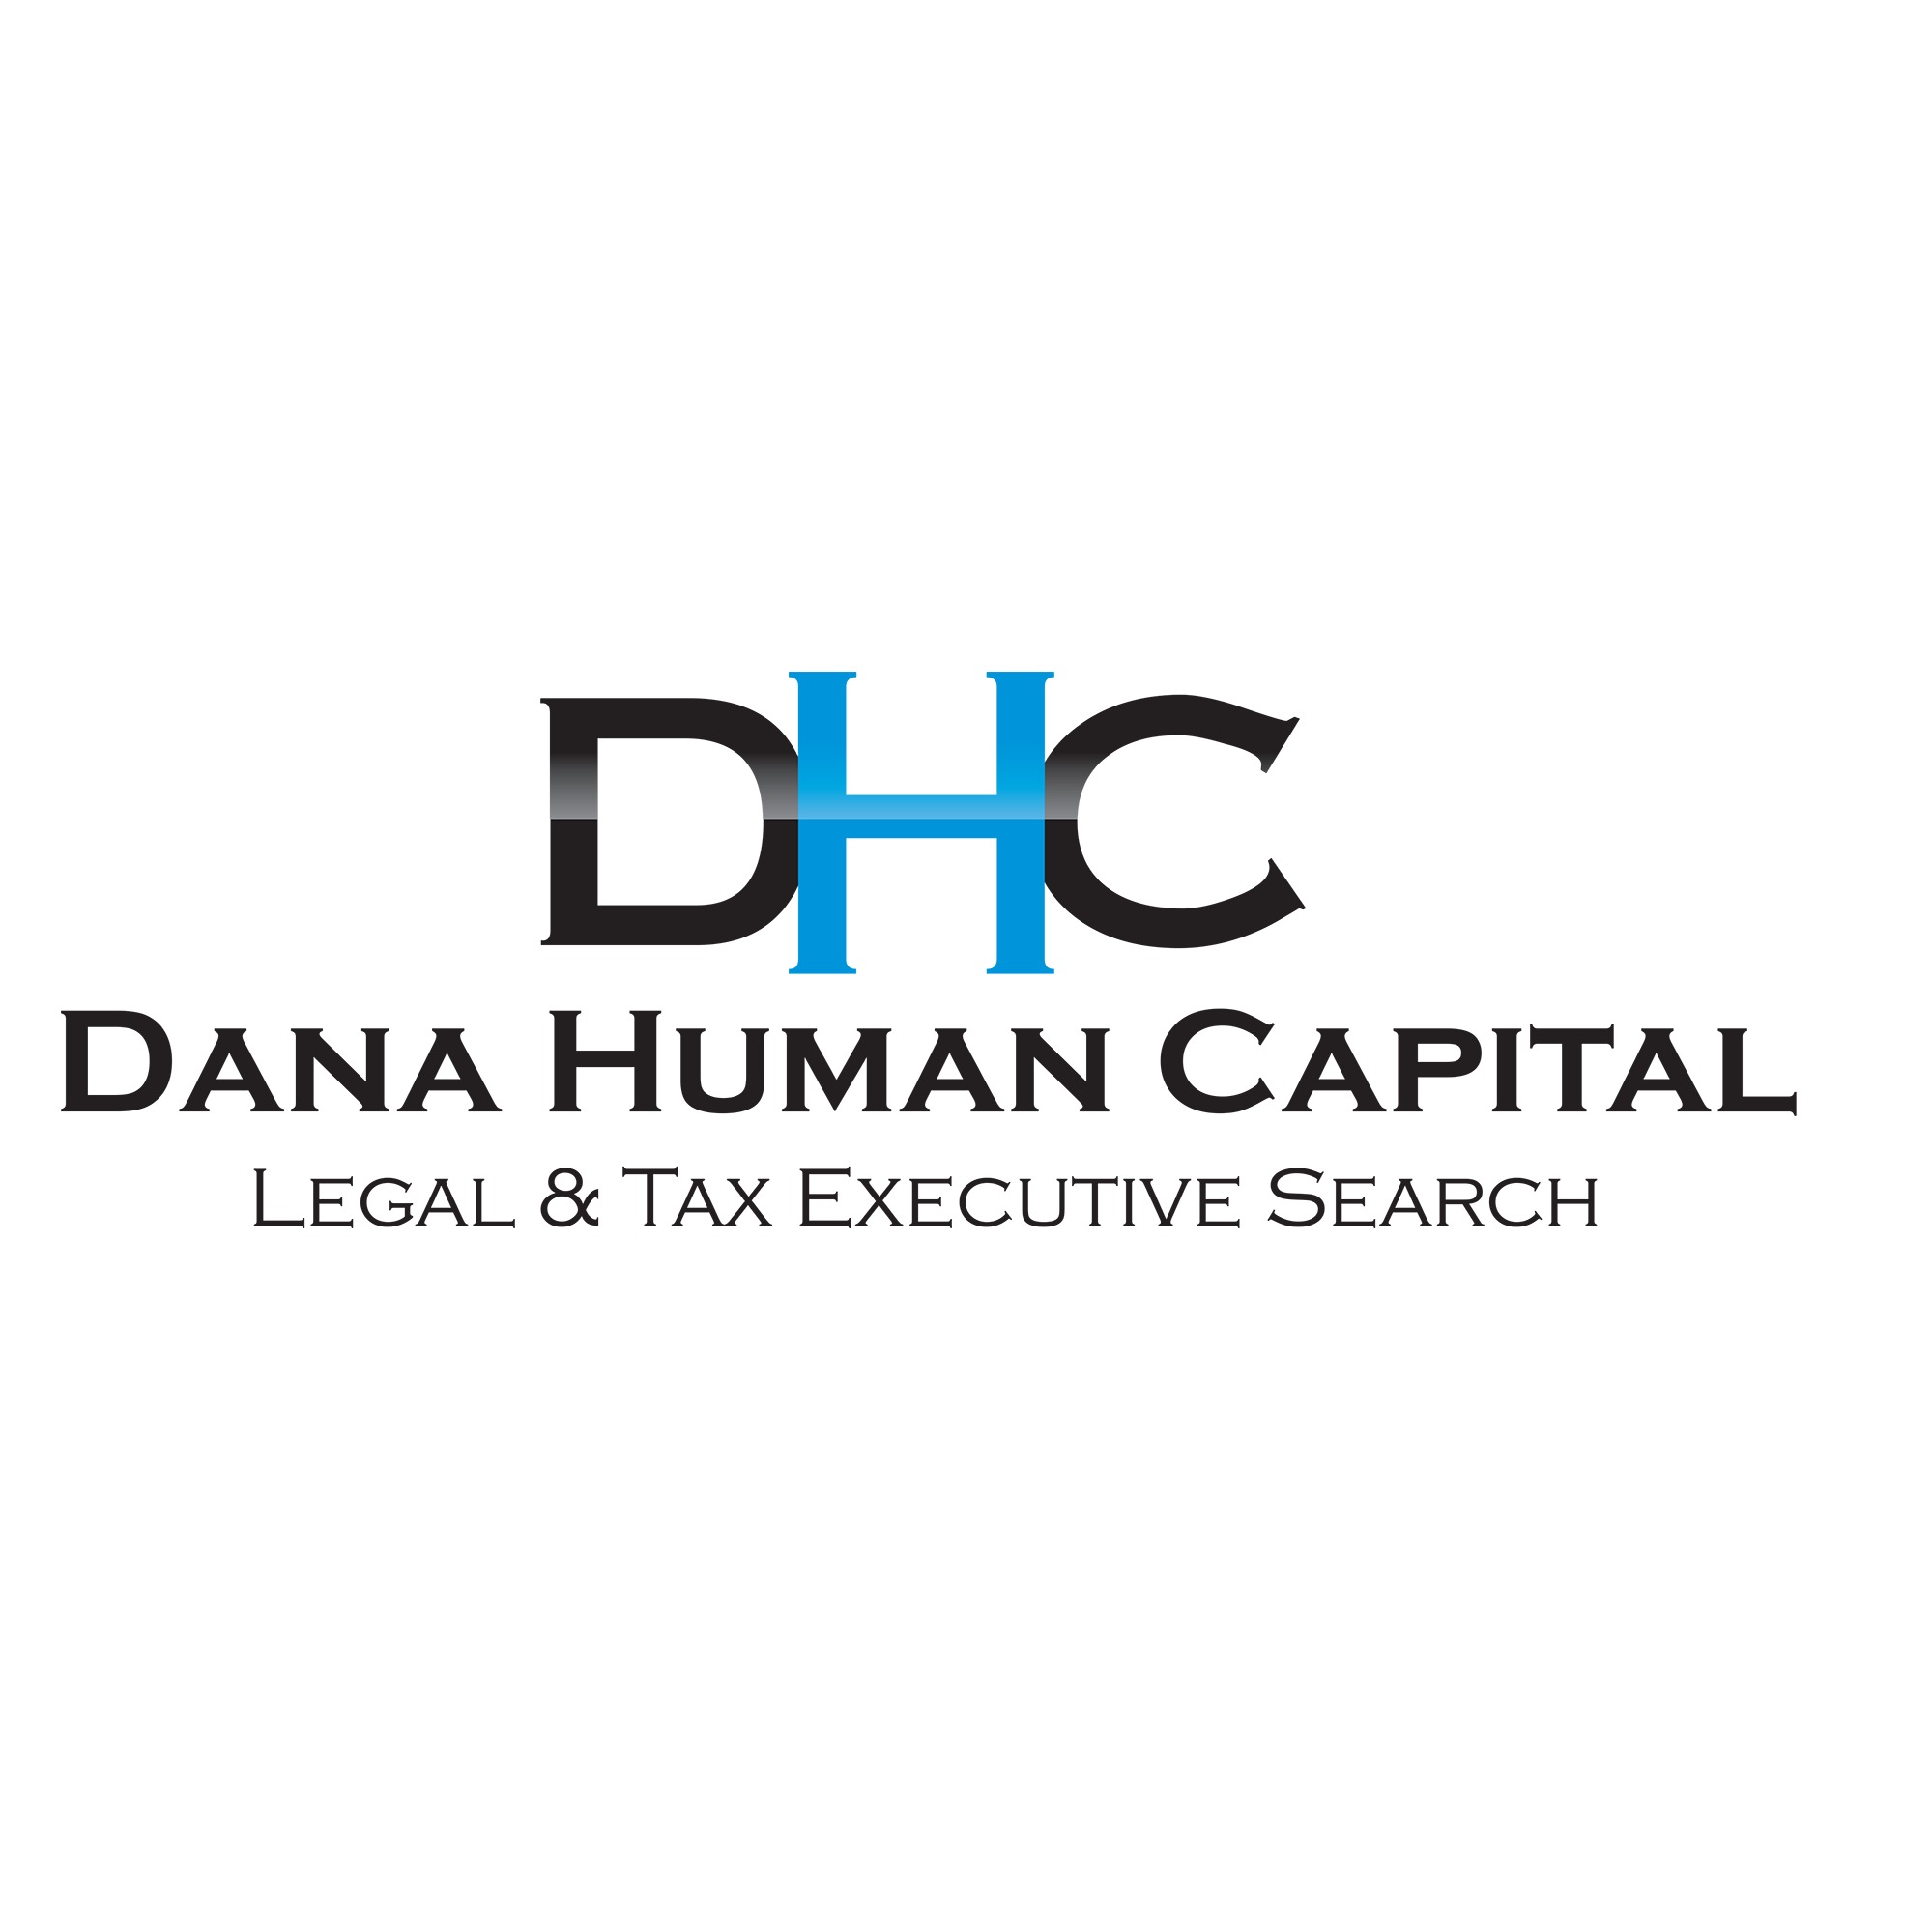 the Dana Human Capital logo.